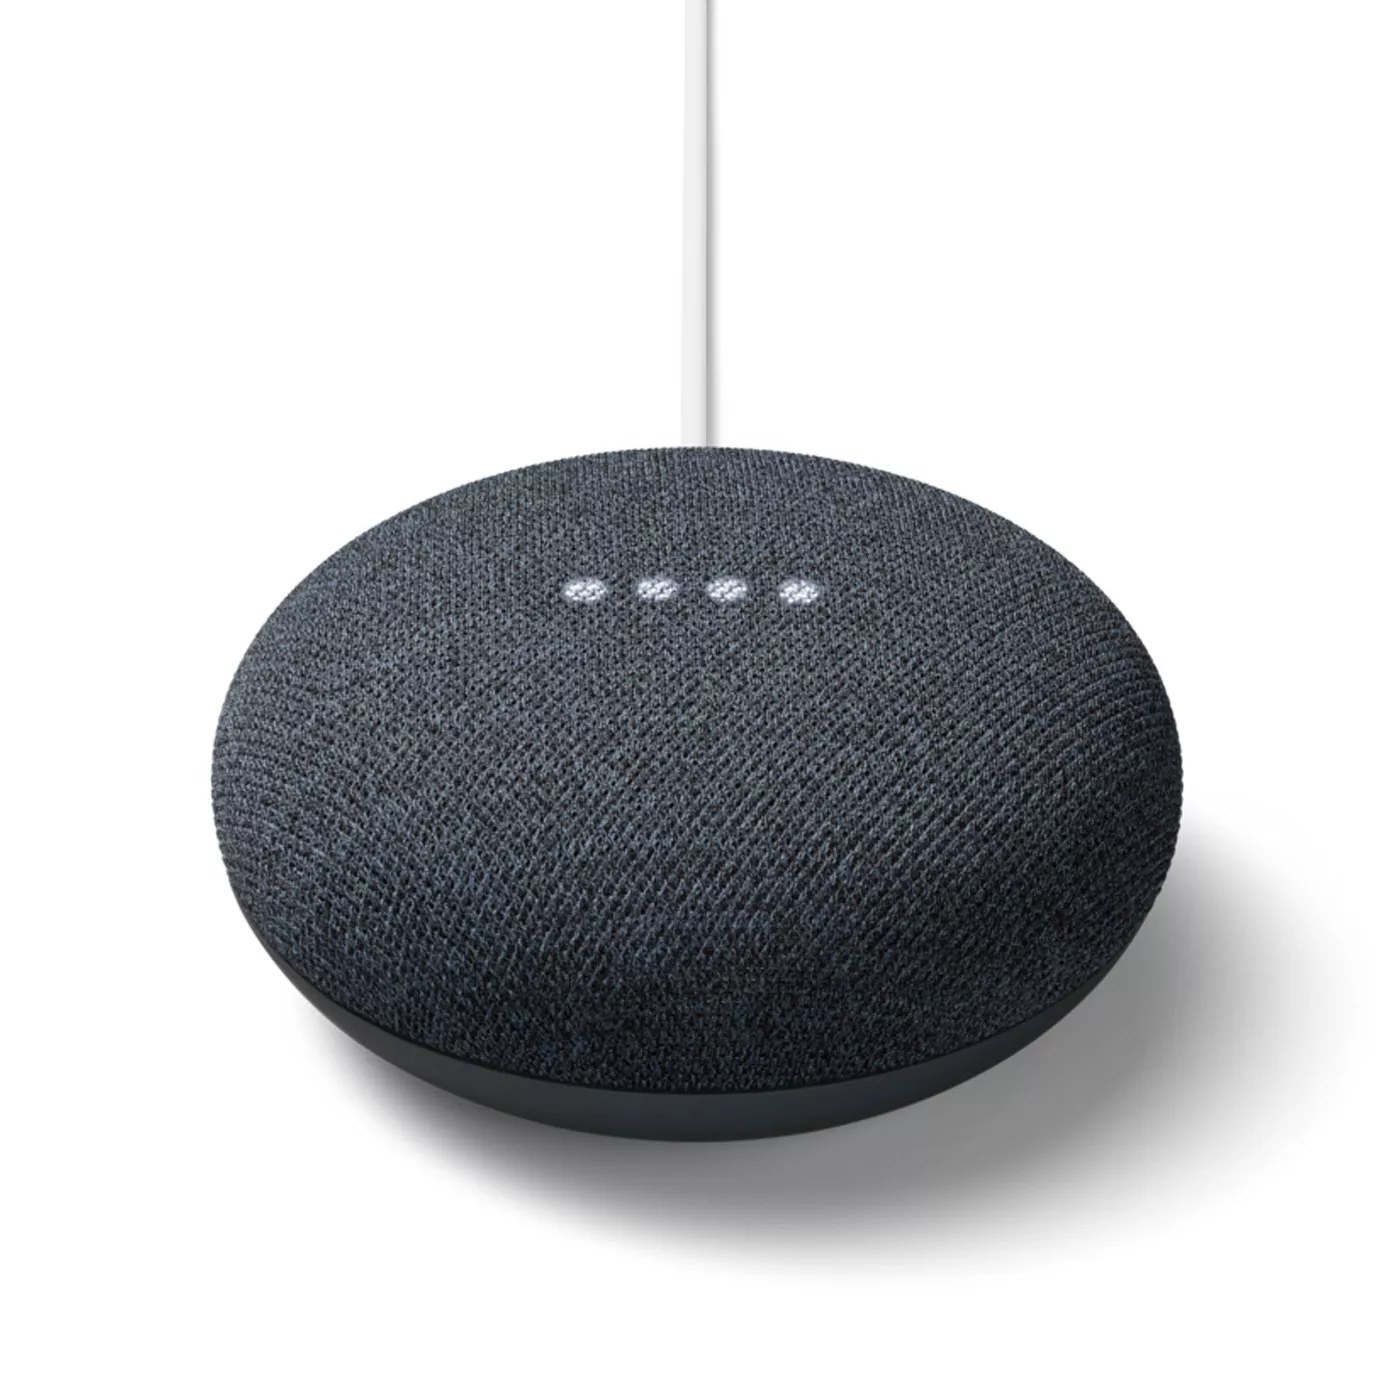 The charcoal Google Nest Mini